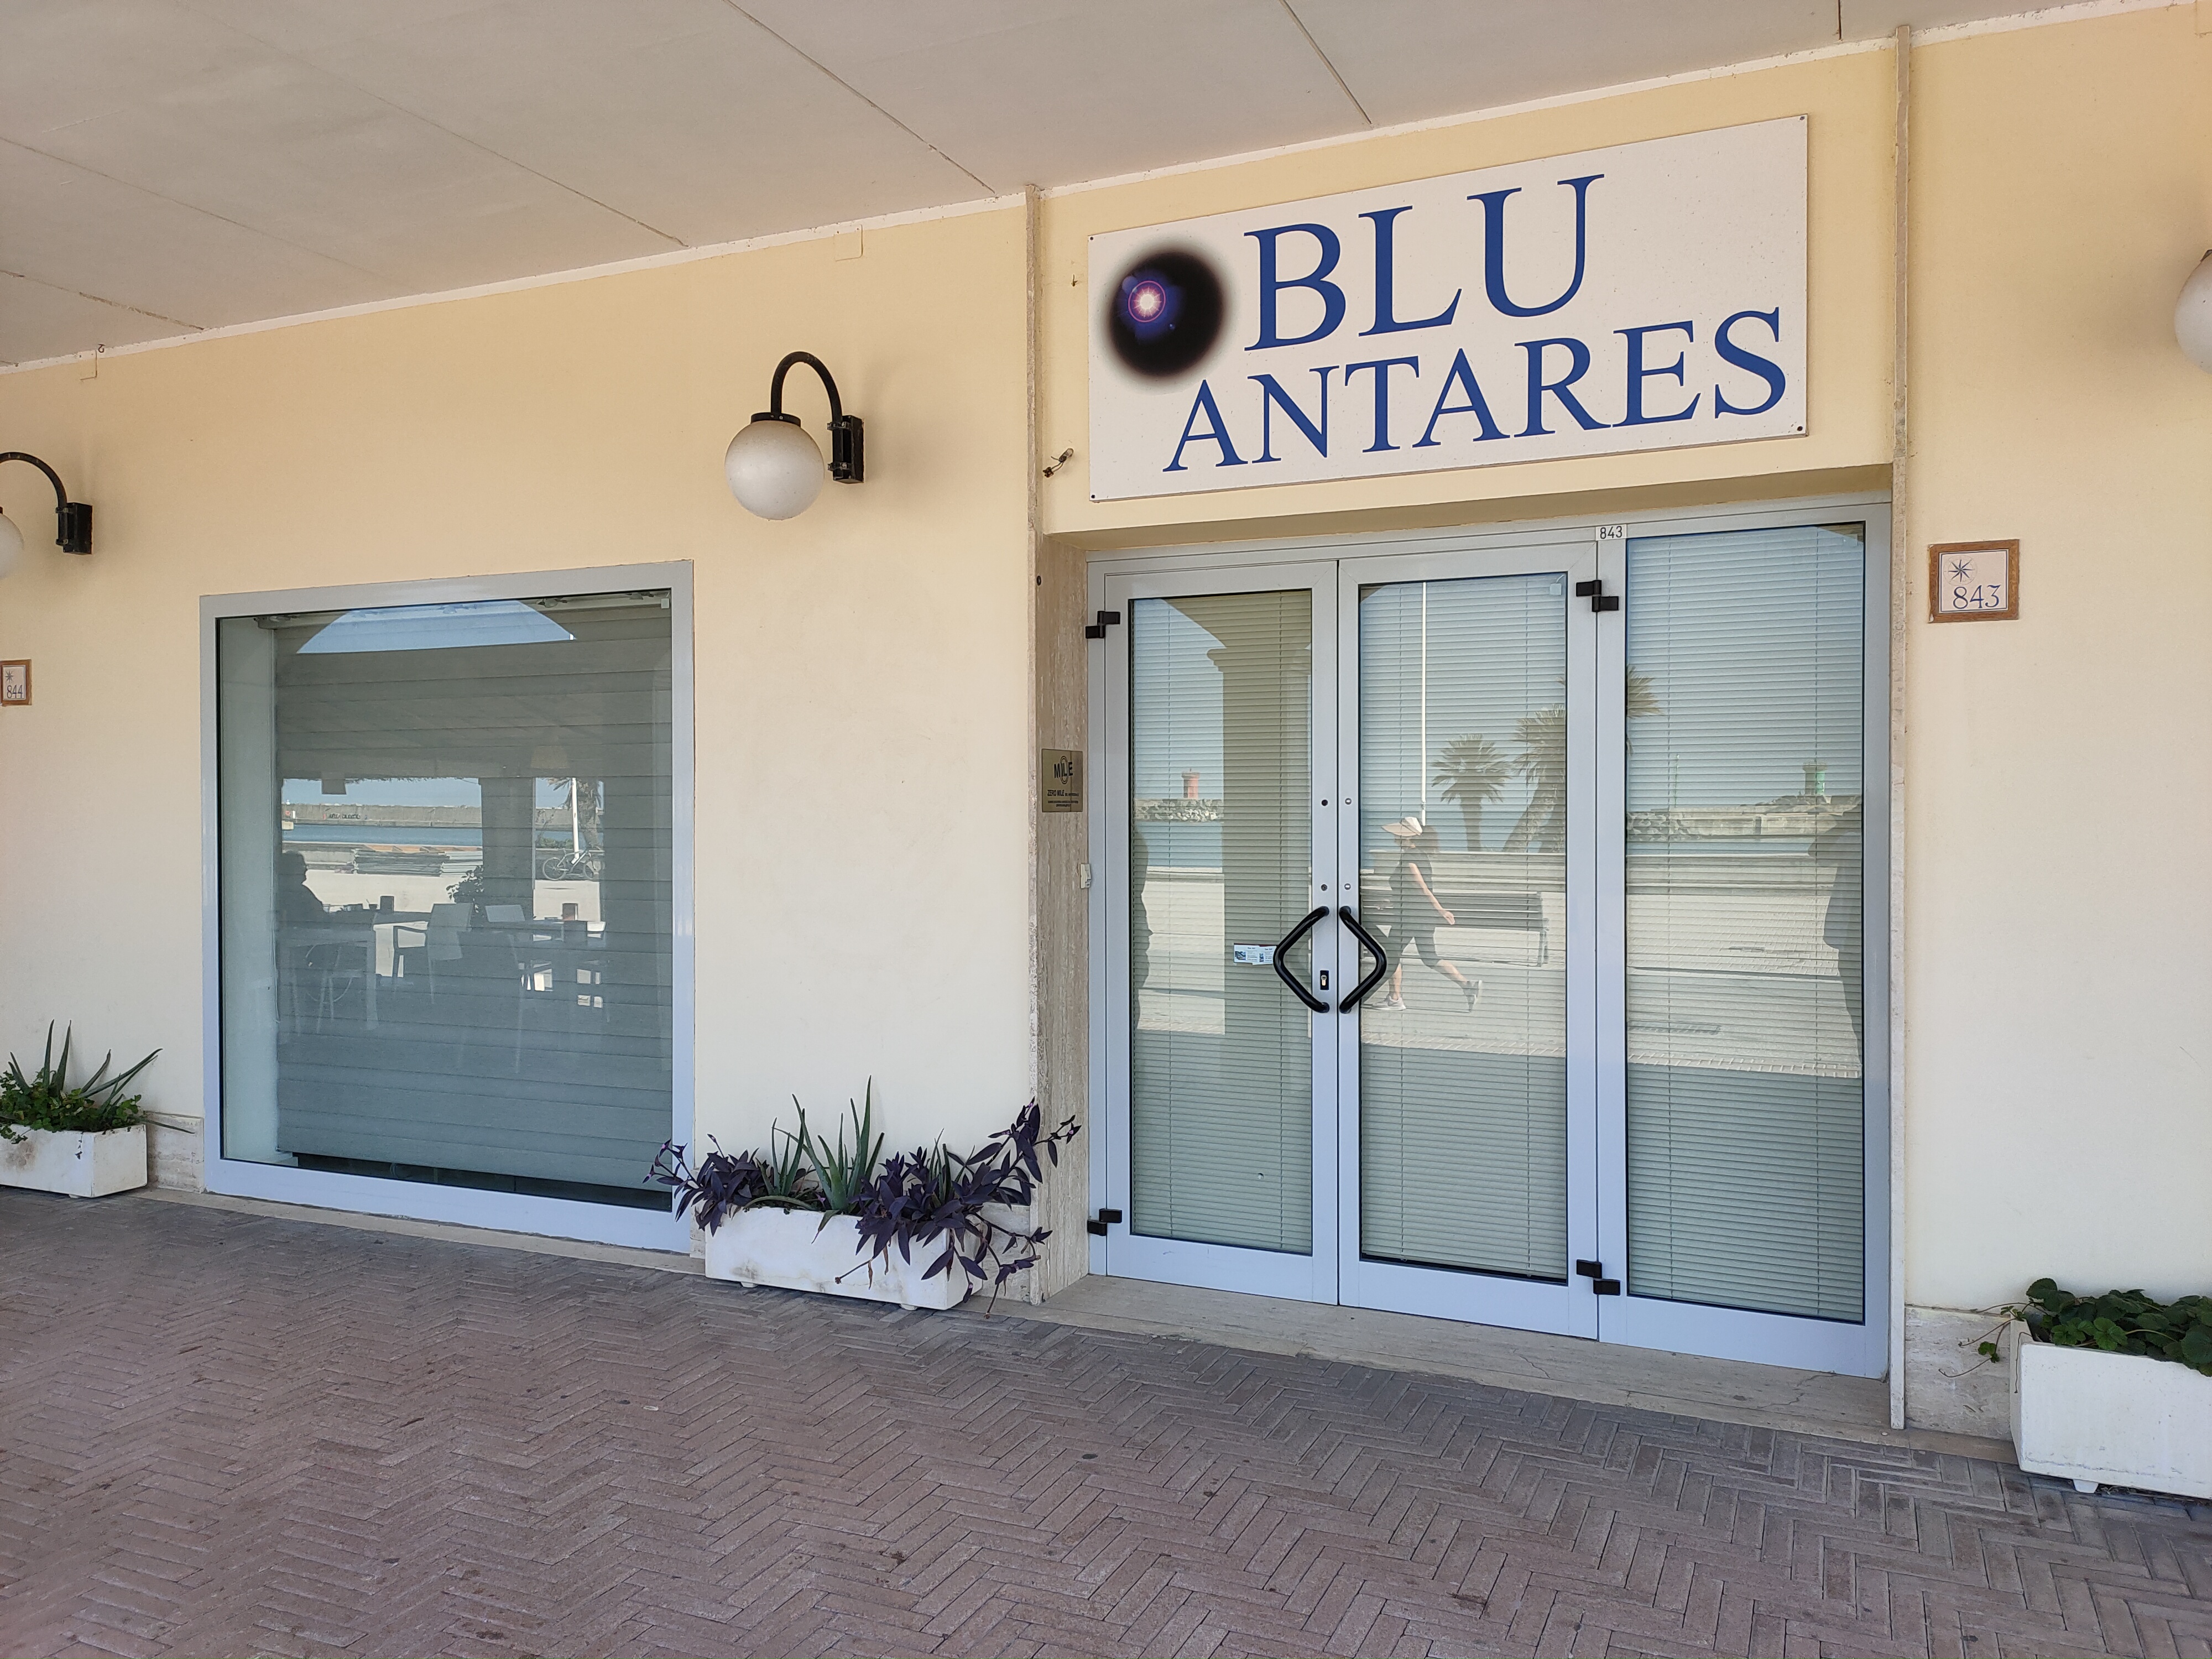 Blu Antares